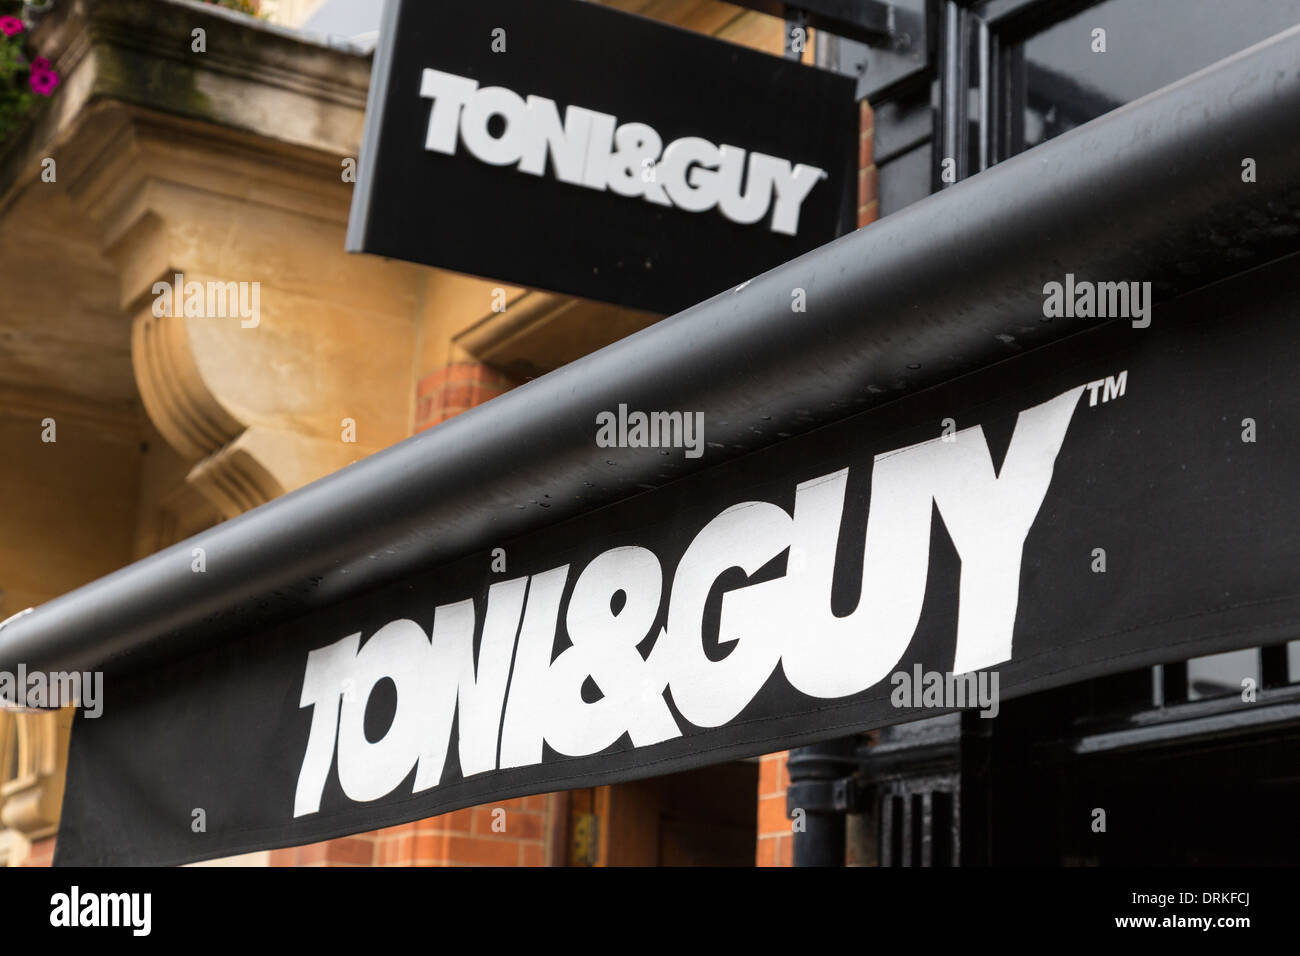 Toni&Guy hairdressers shop window Stock Photo